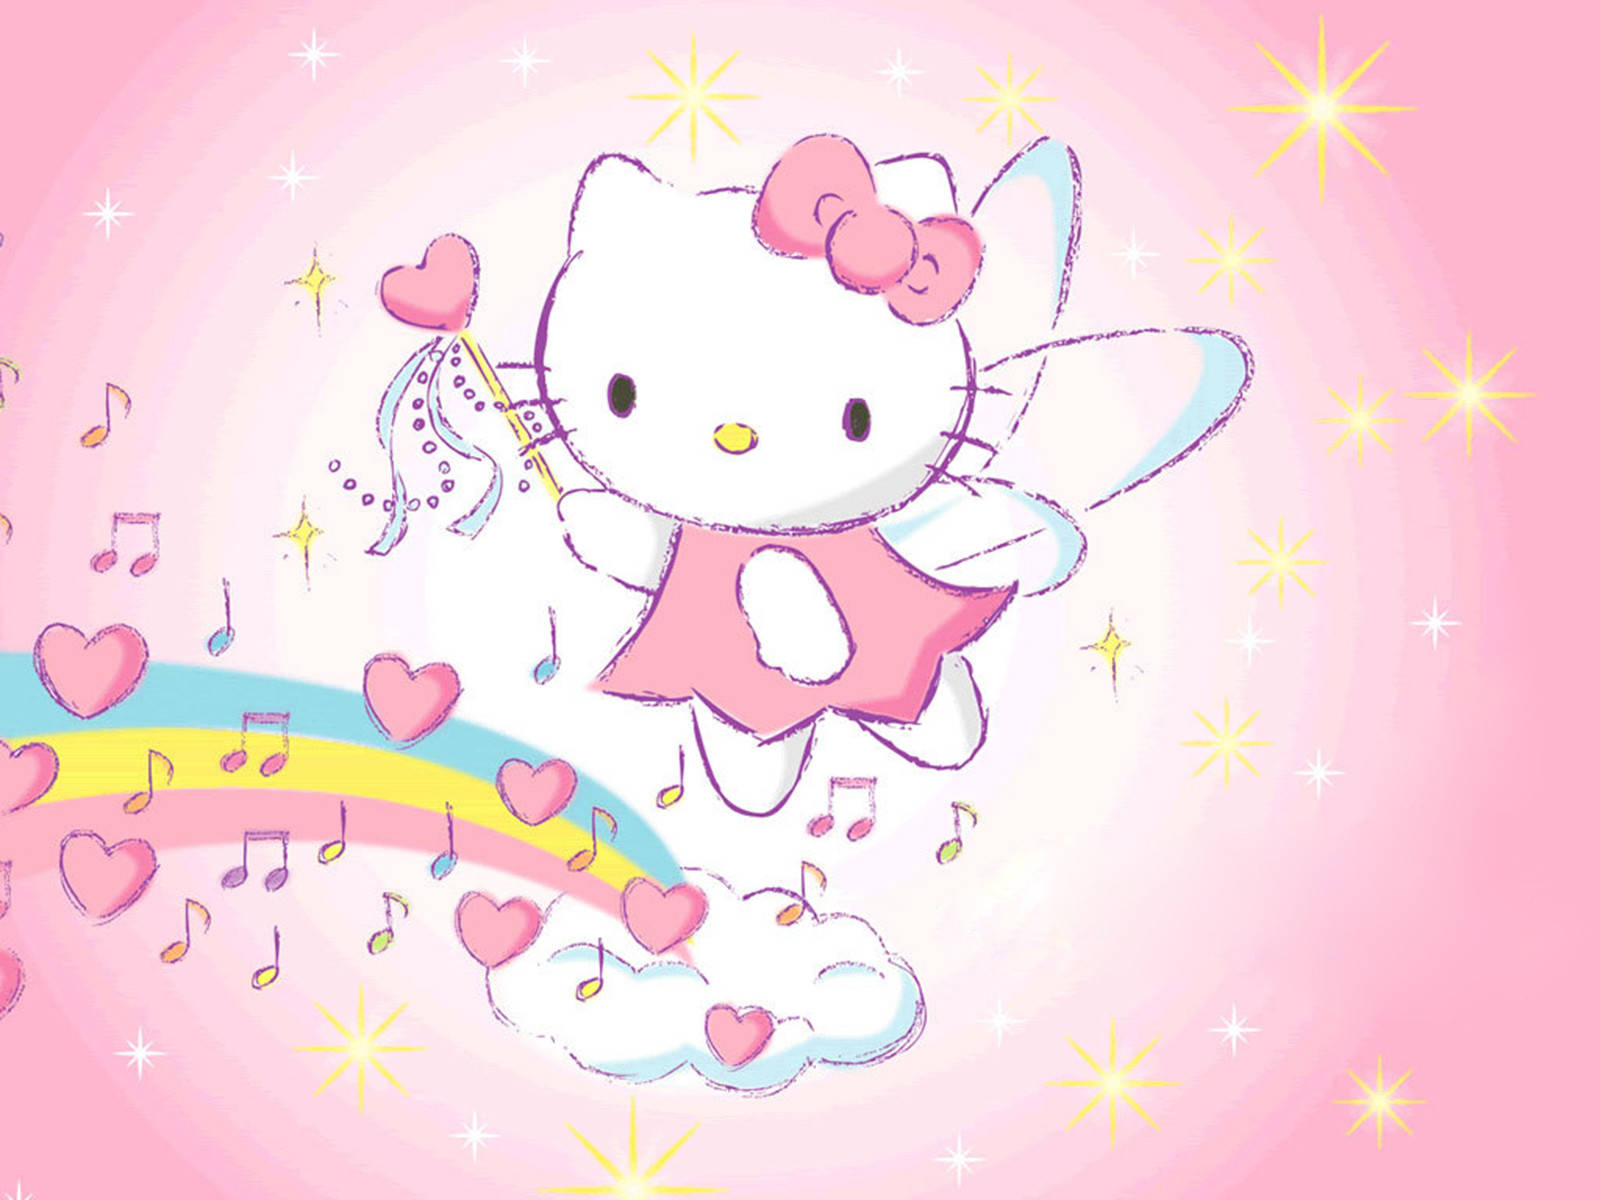 Sanriodesktop Hello Kitty Musical-fee Wallpaper